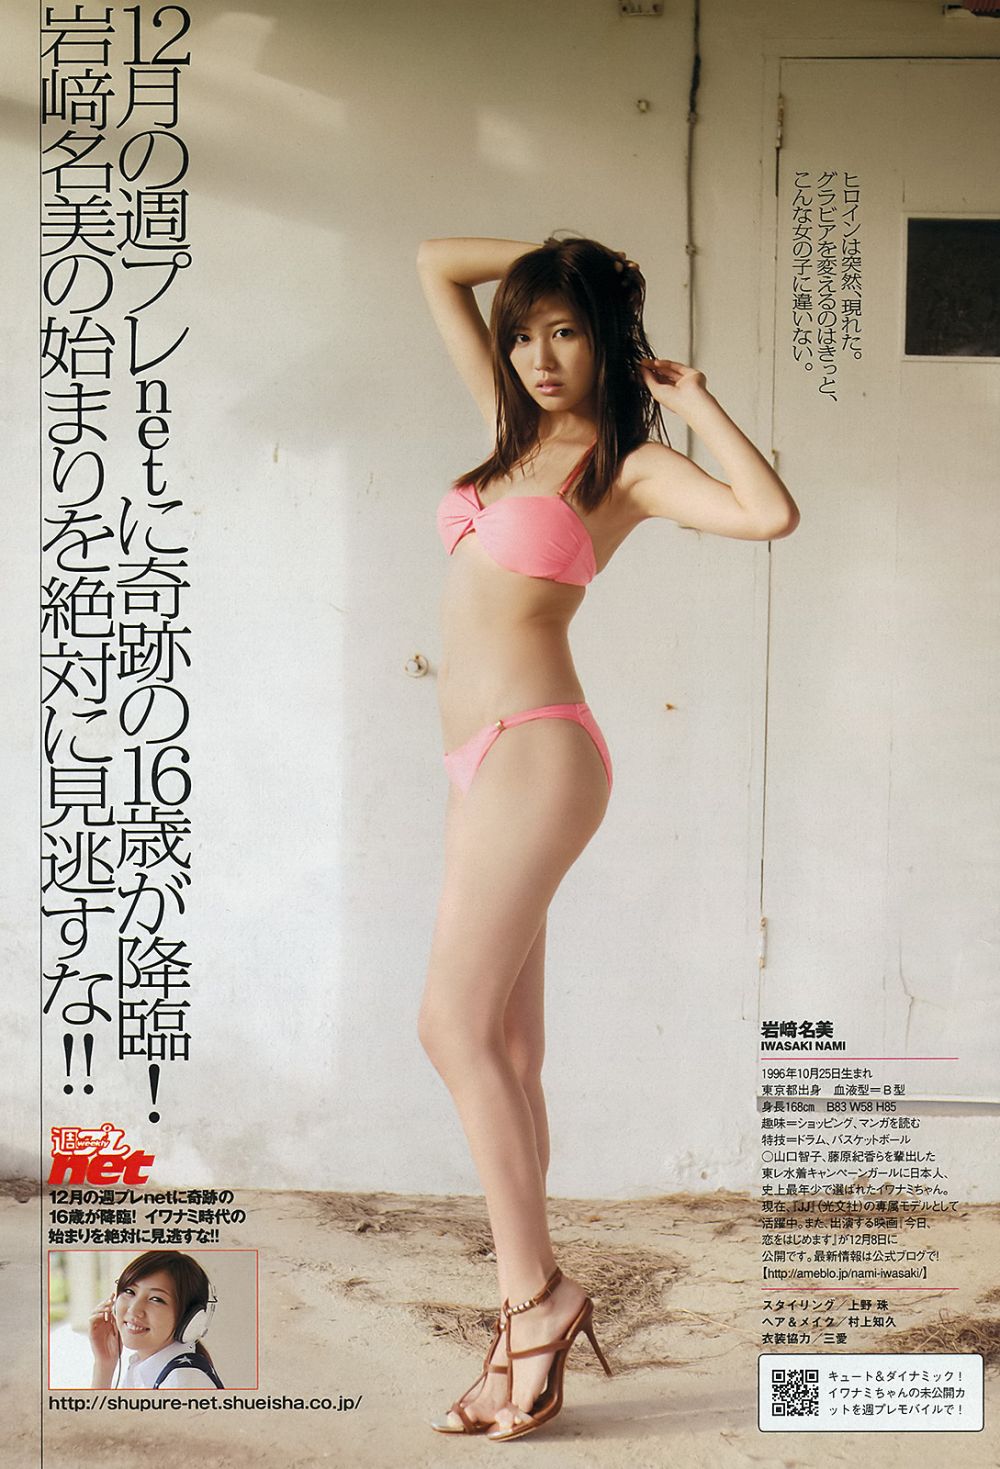 Nami Iwasaki Sexy and Hottest Photos , Latest Pics